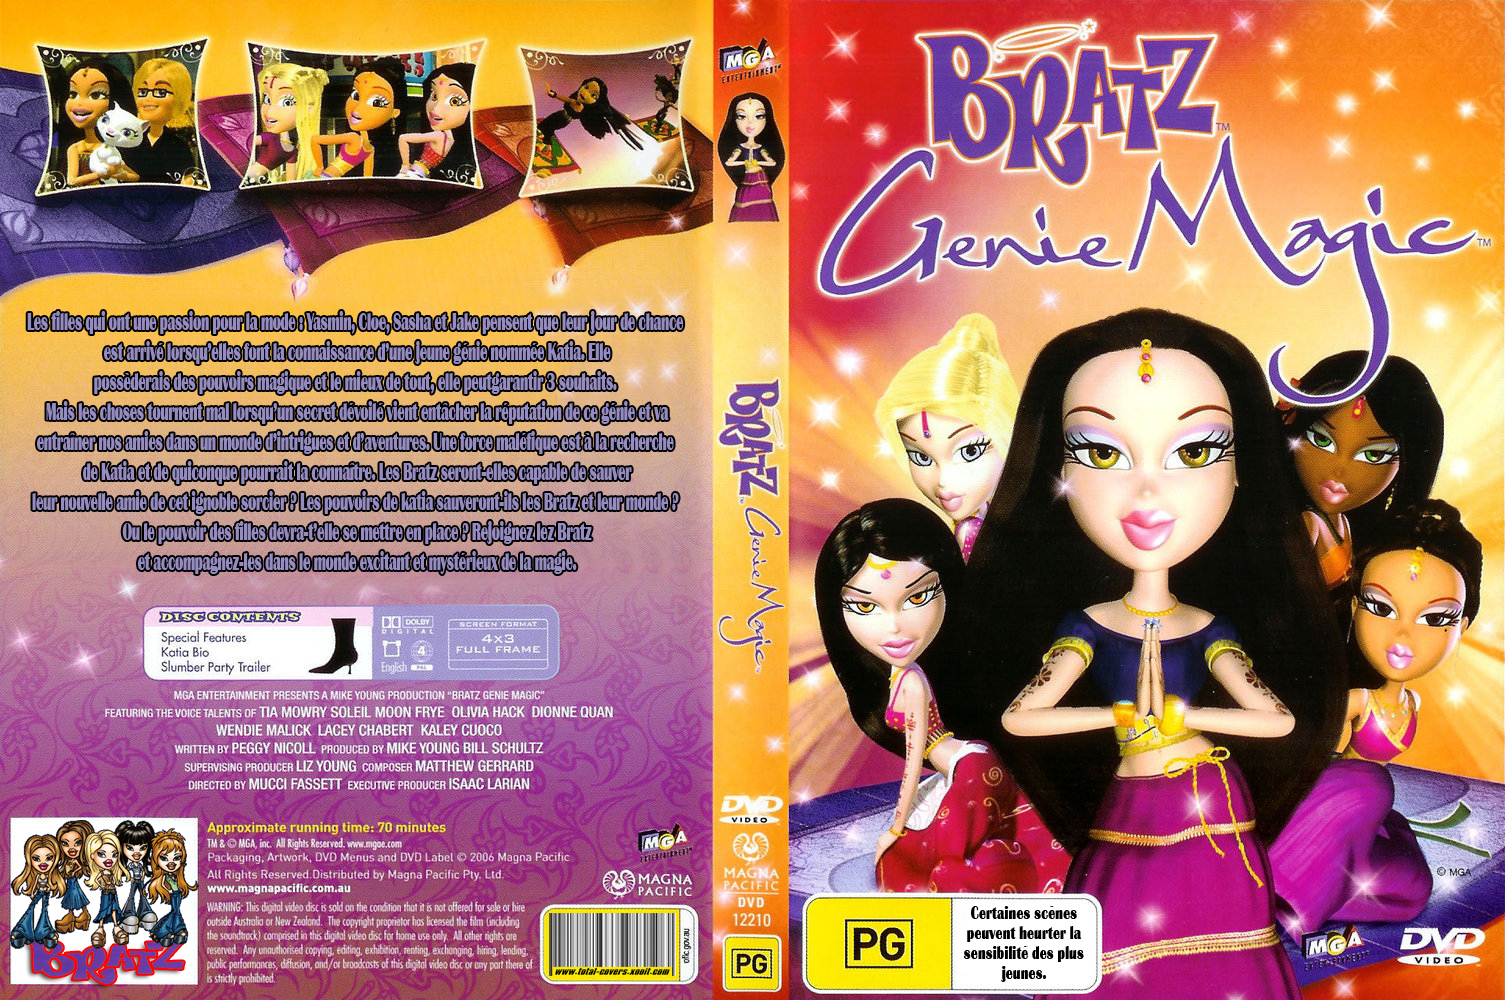 Jaquette DVD Bratz Genie magic